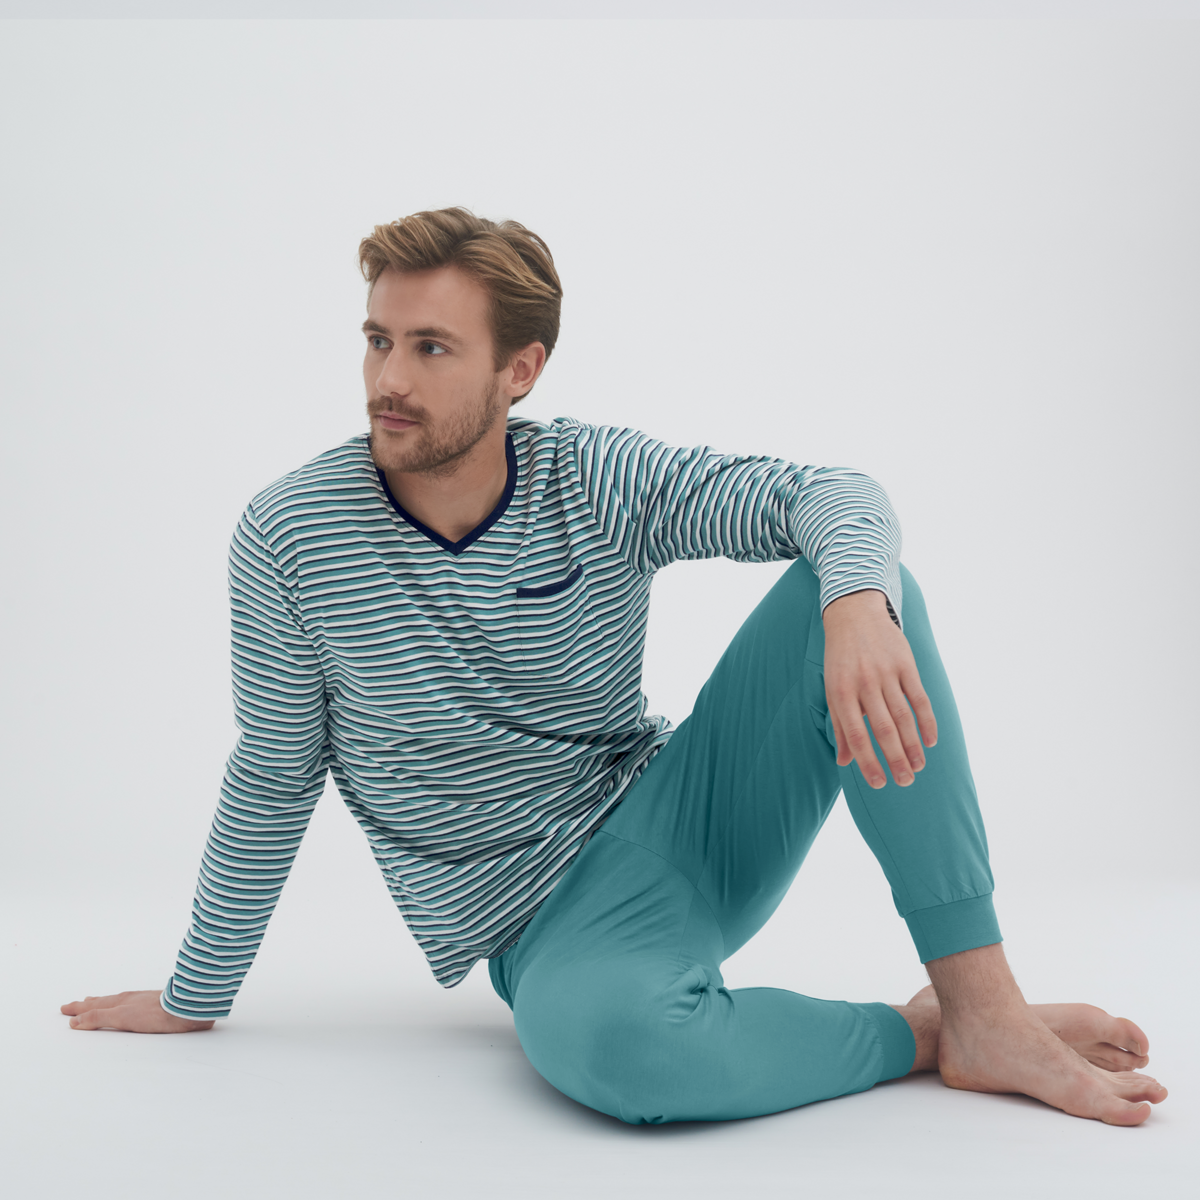 Turquoise Hommes Pyjama